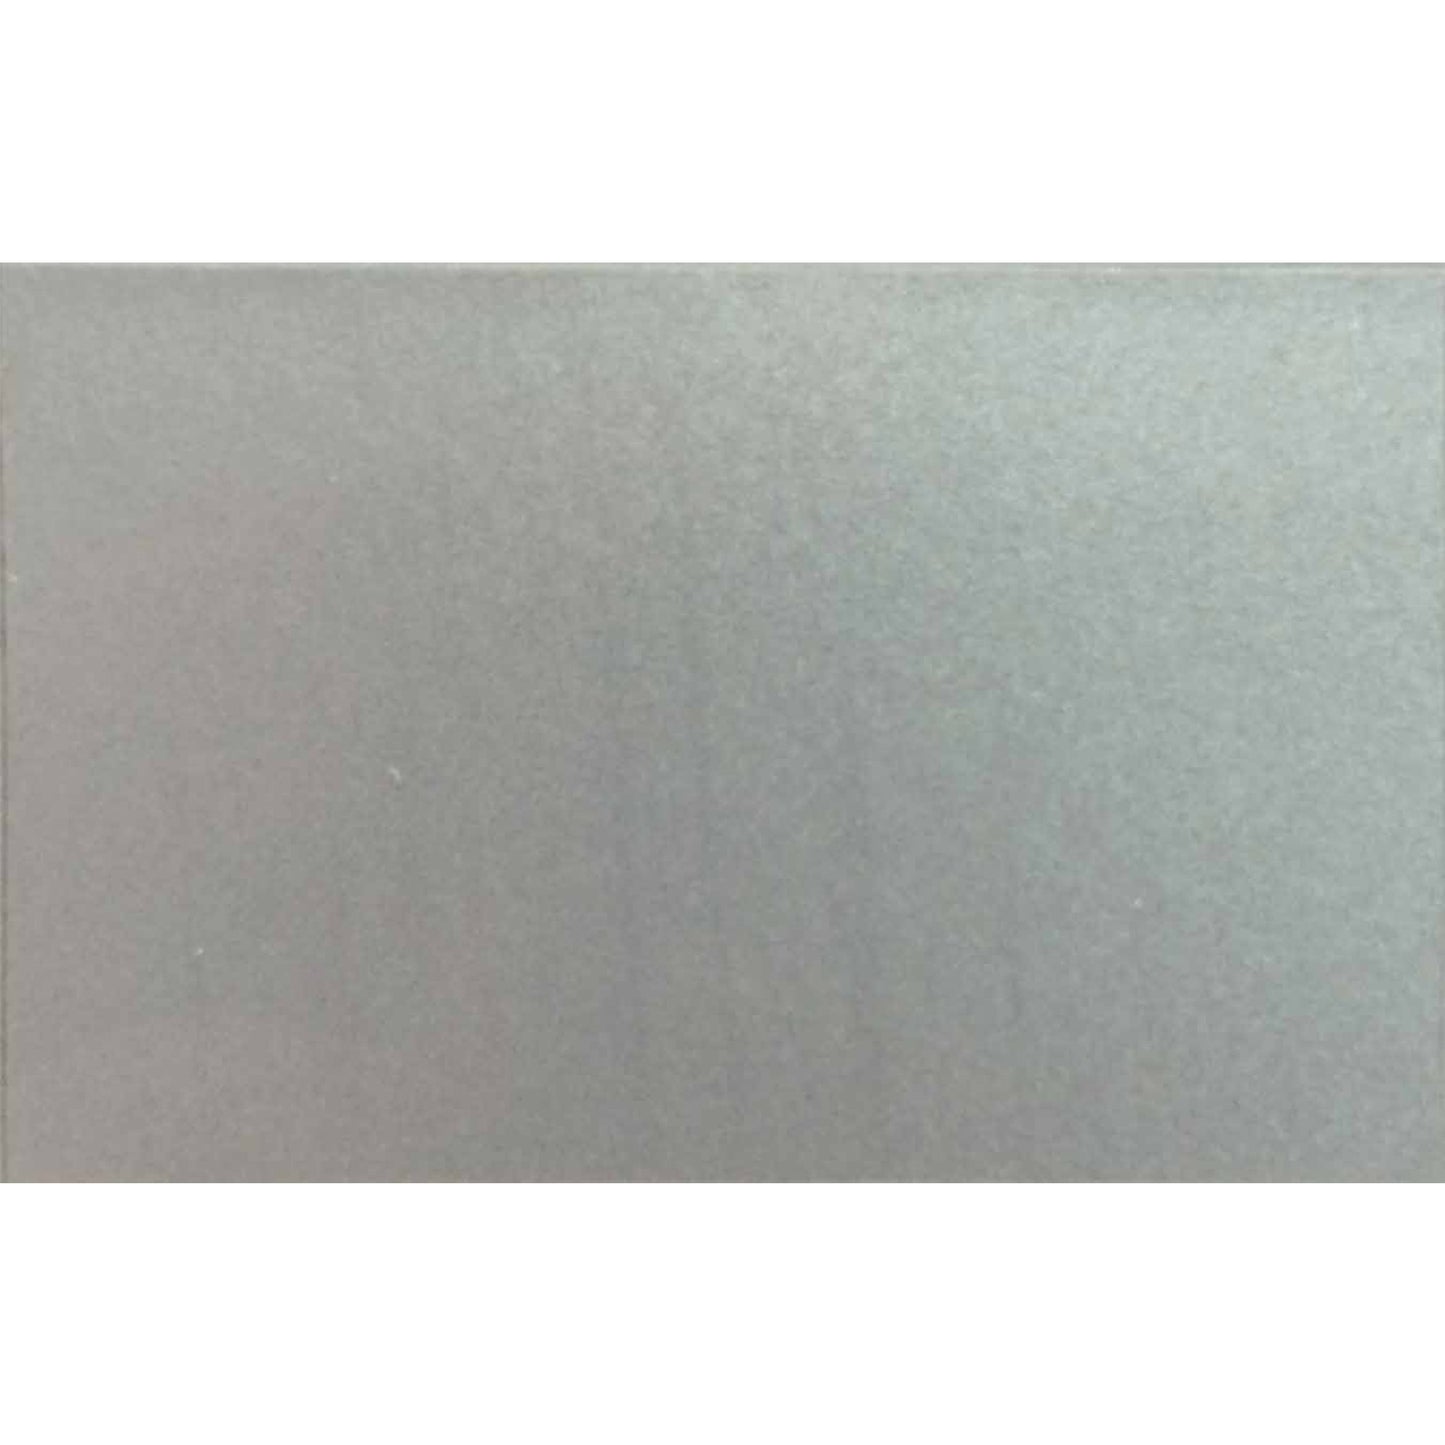 M0500 PET + Acrylic White (1.23X45.7M)